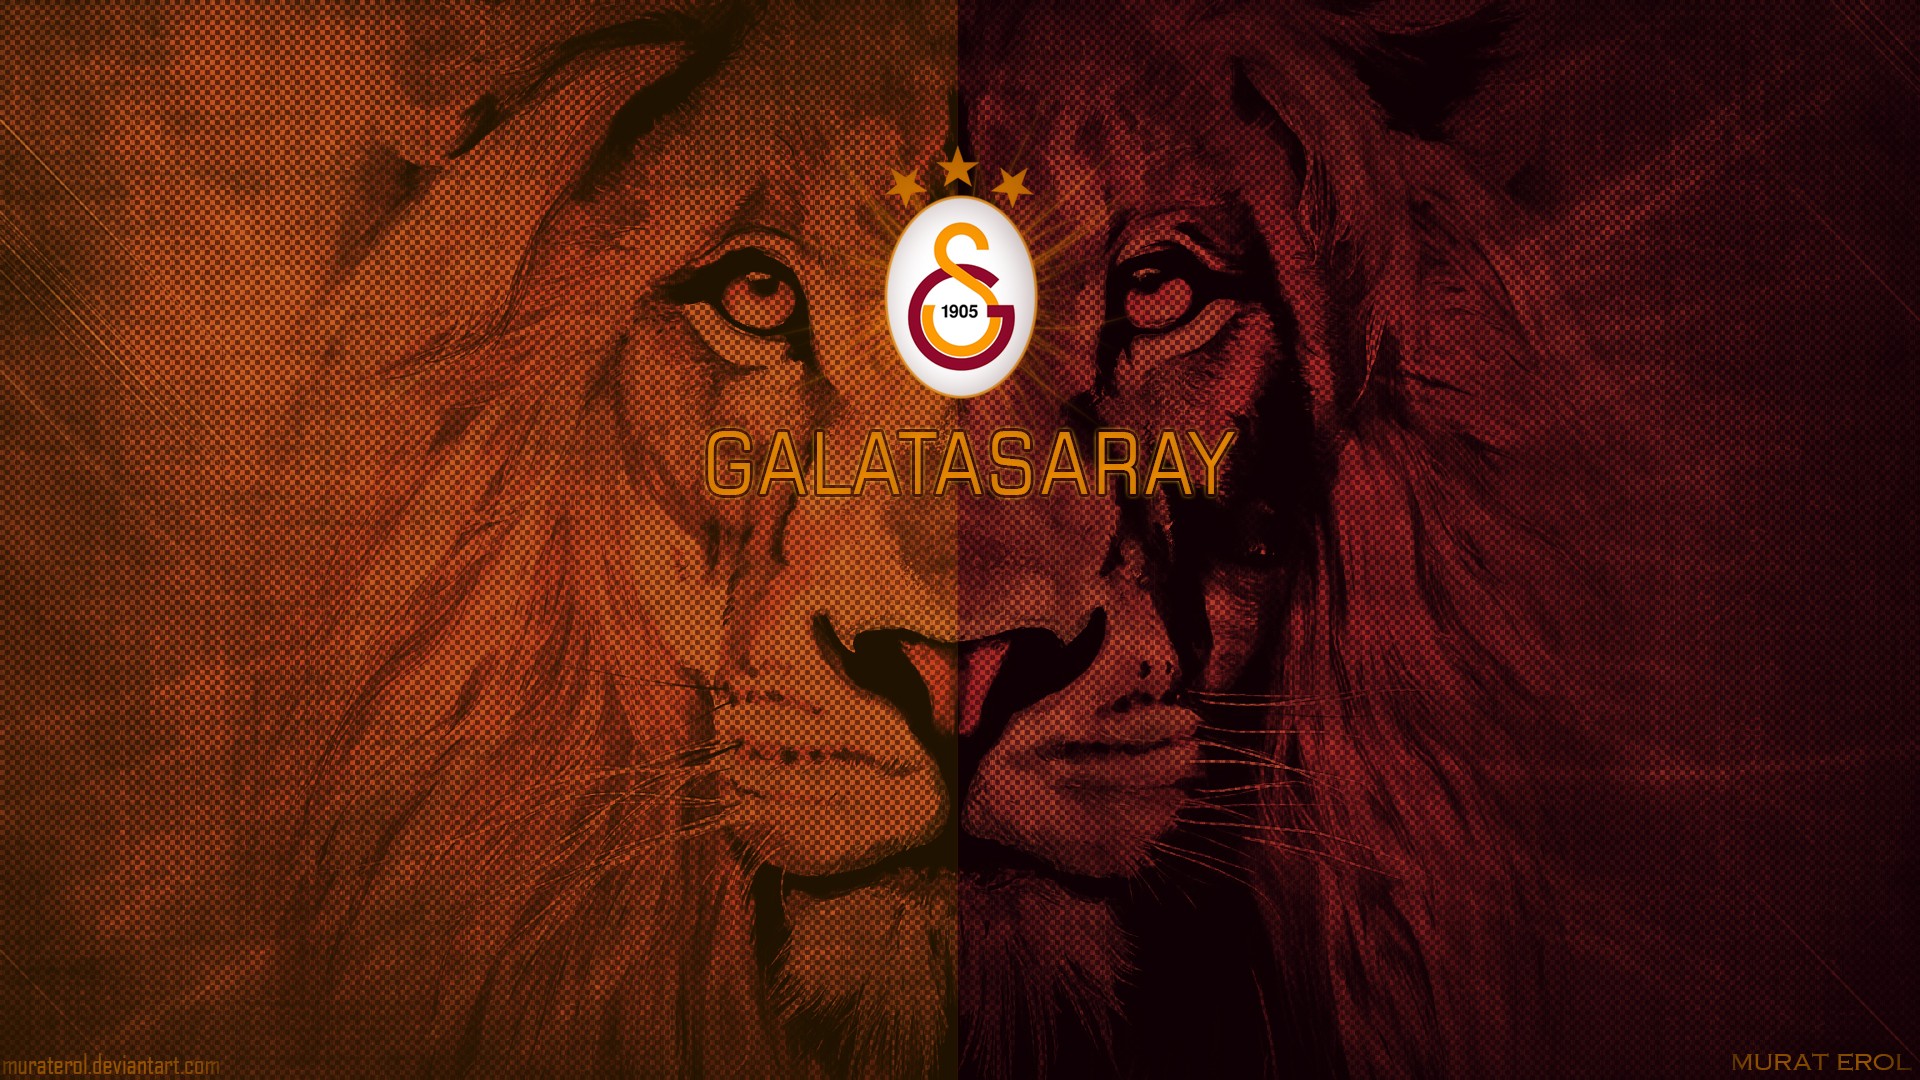 General 1920x1080 1905 (Year) logo animals mammals Galatasaray S.K. soccer clubs Turkey Turkish